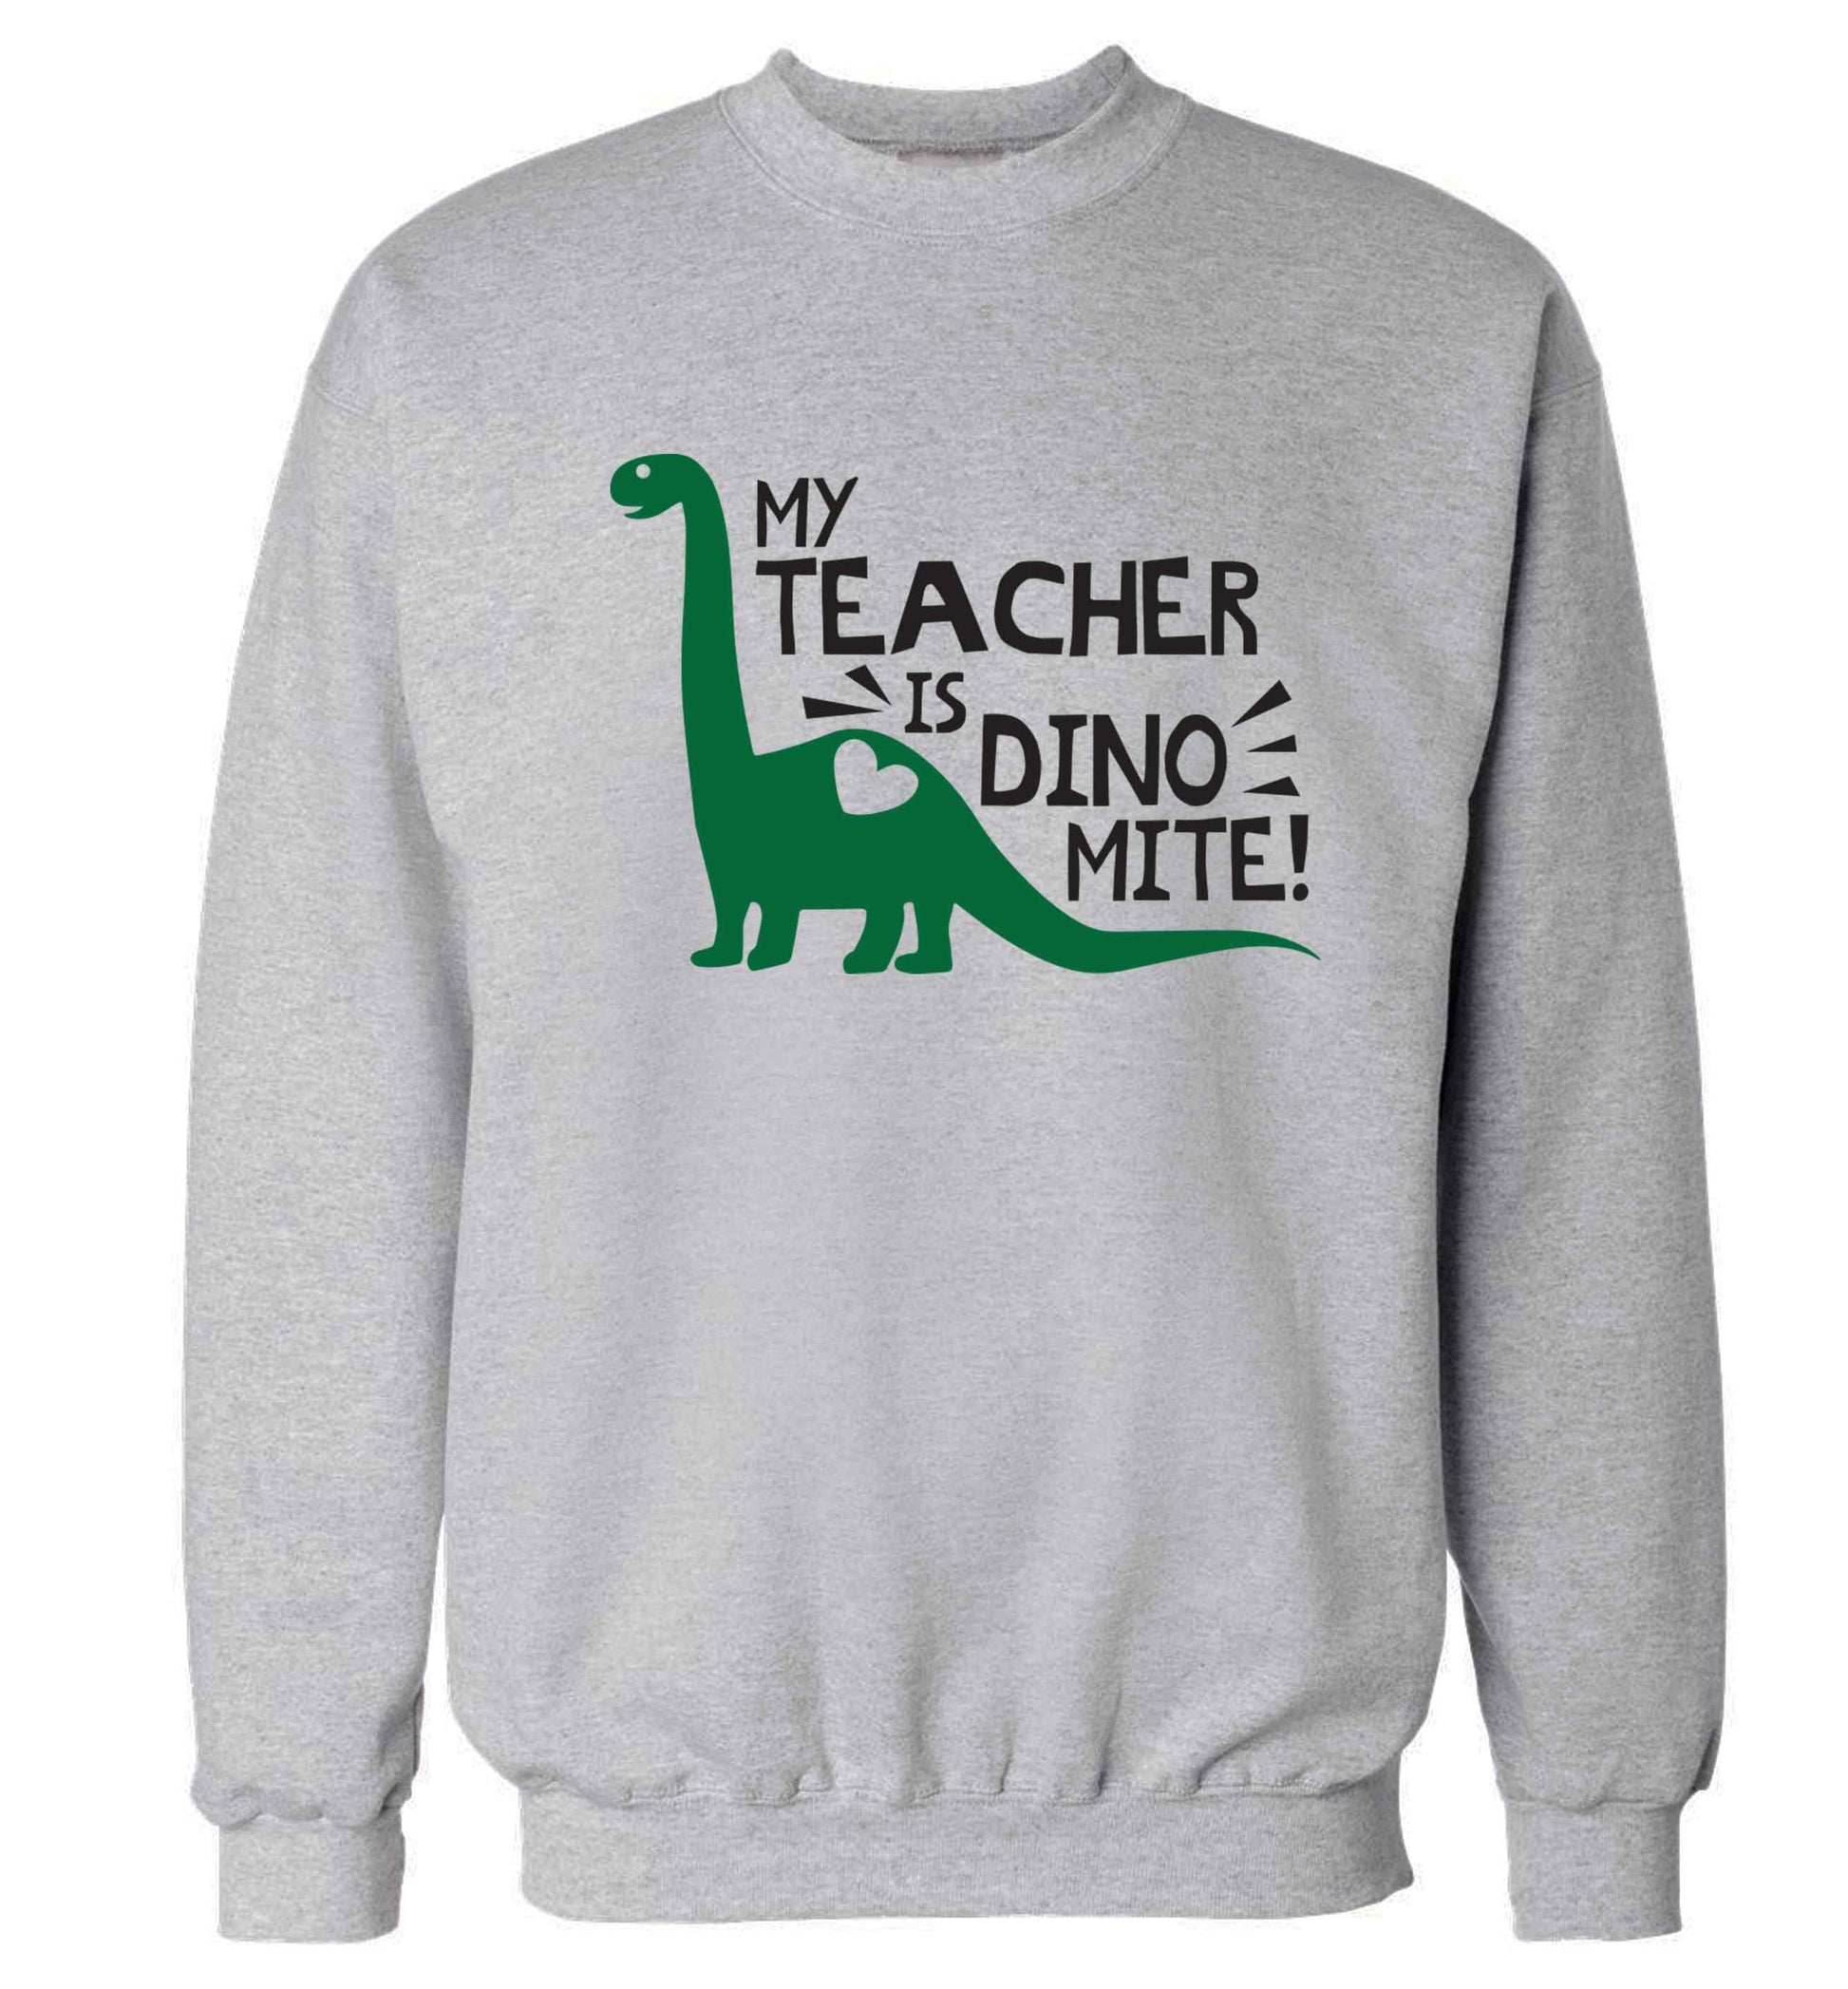 My teacher is dinomite! Adult's unisex grey Sweater 2XL